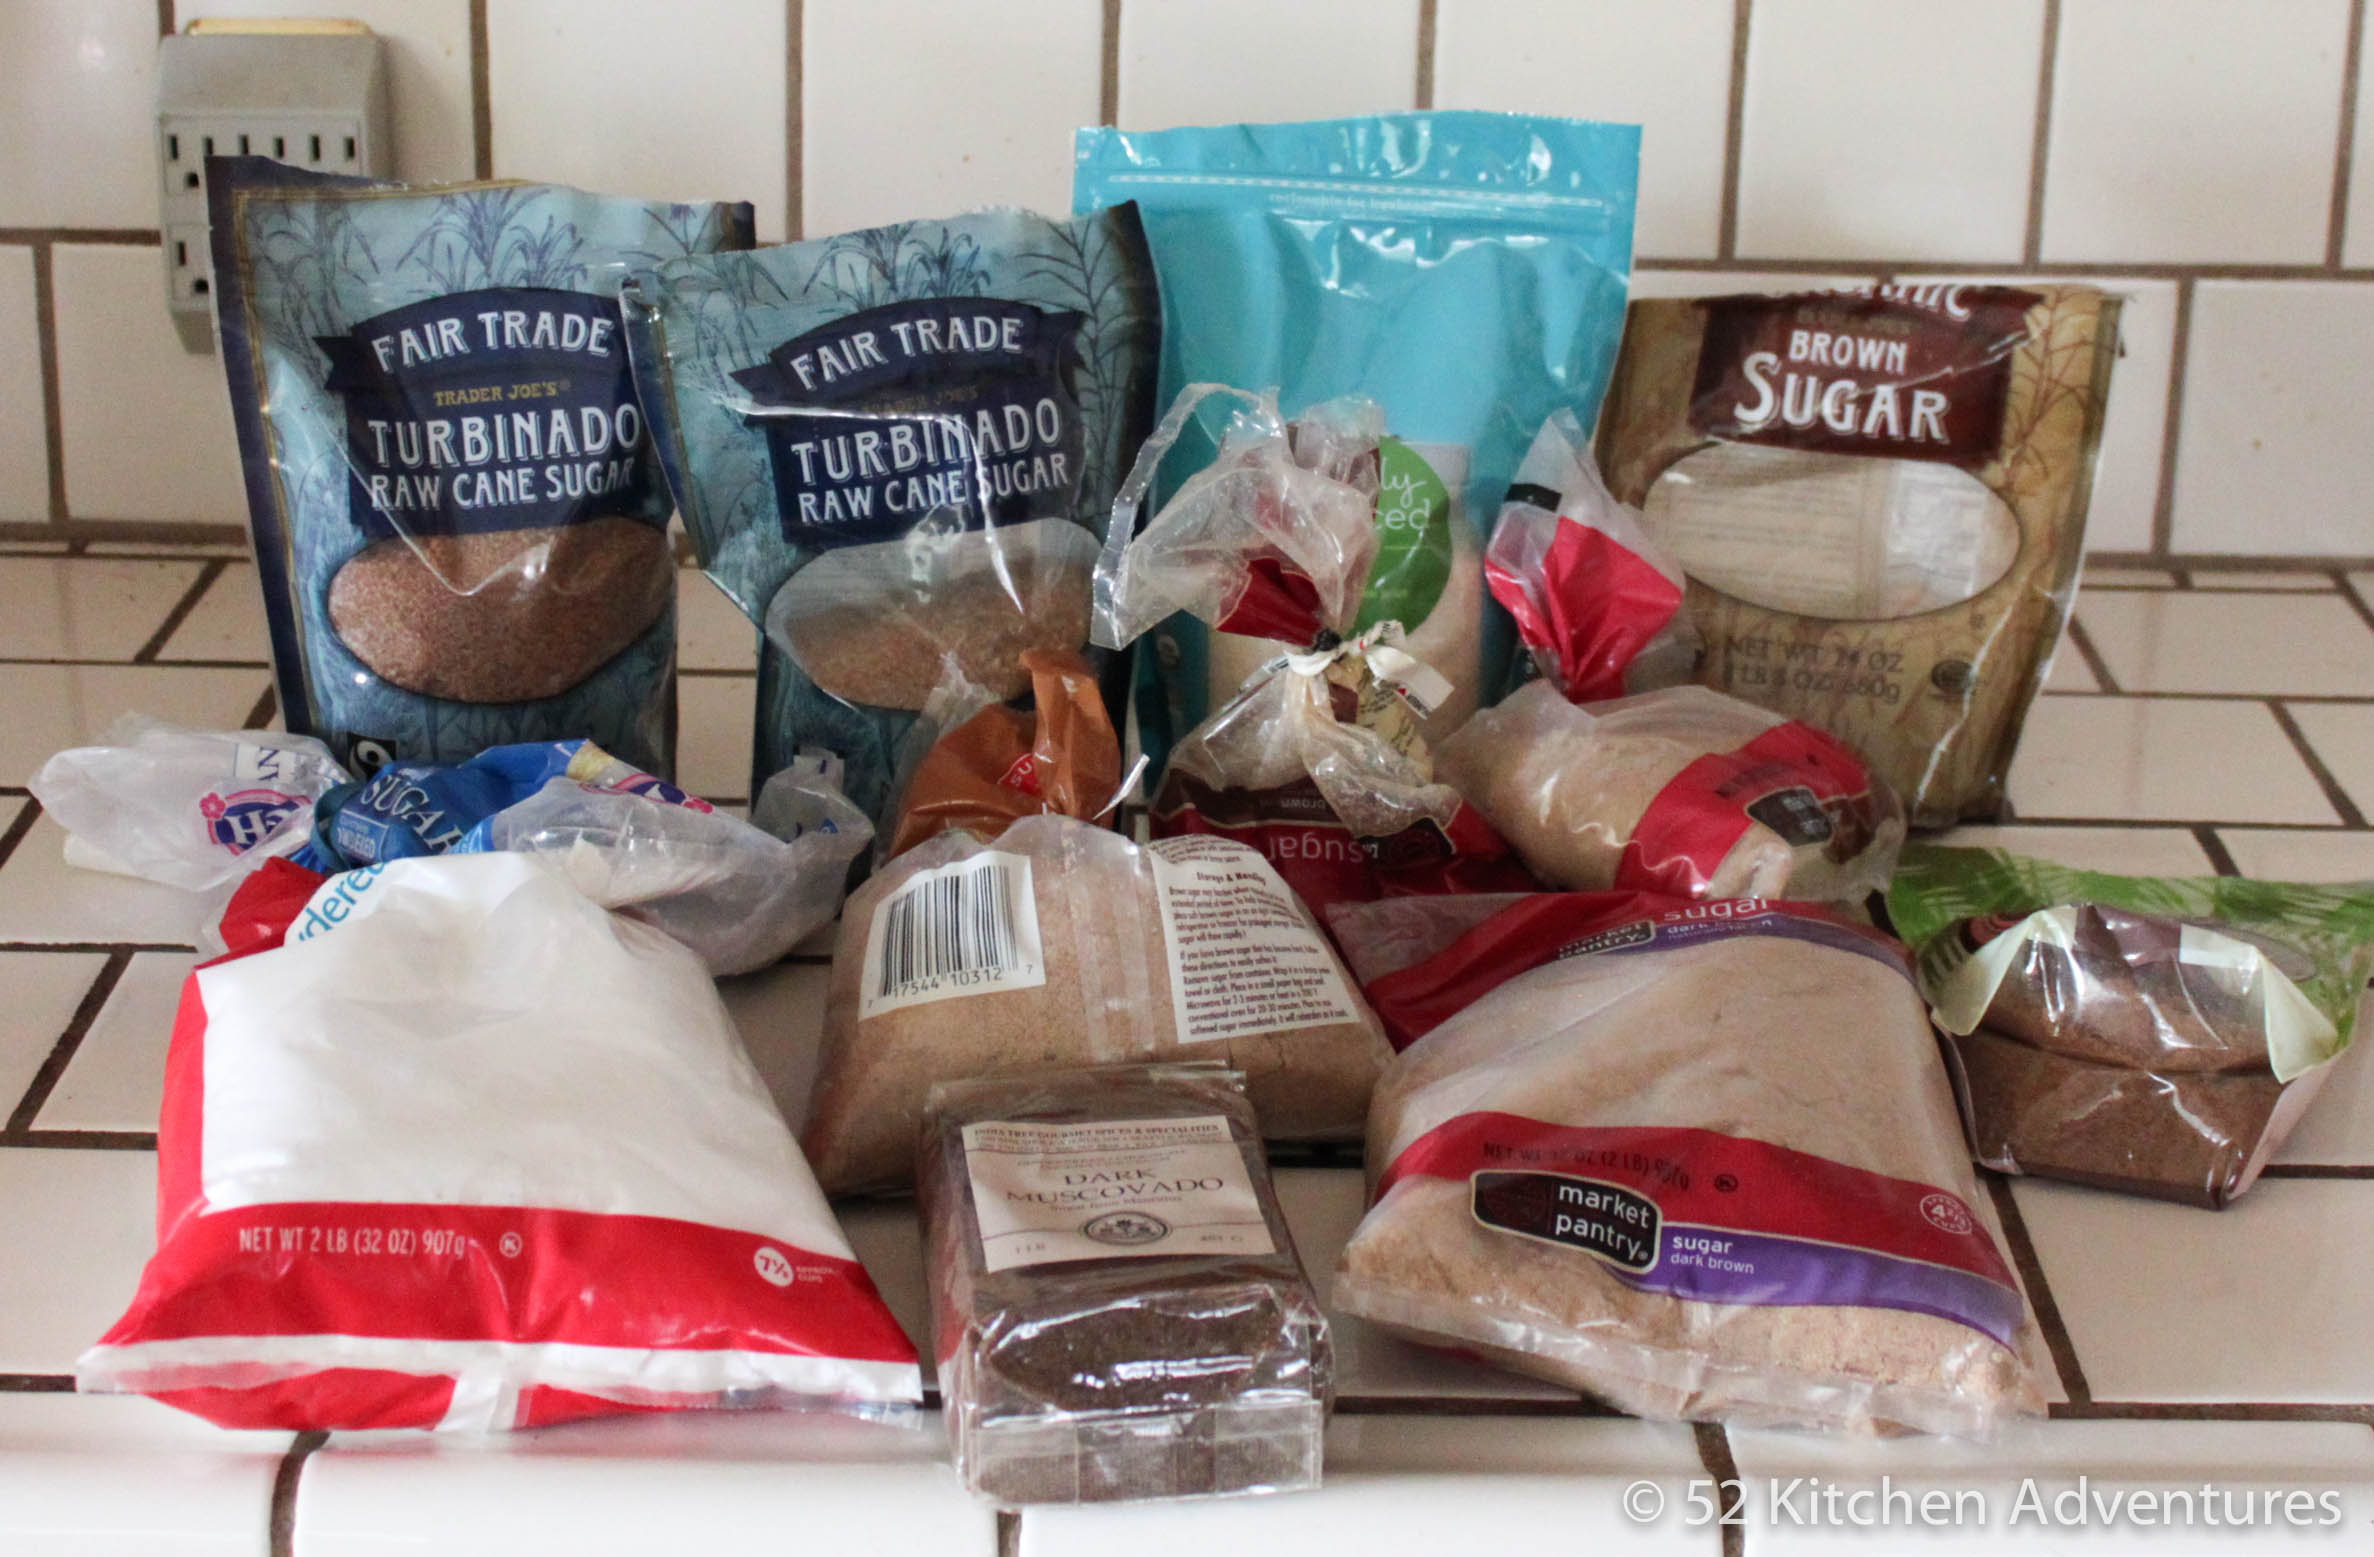 5 Ways to Organize Your Baking Supplies